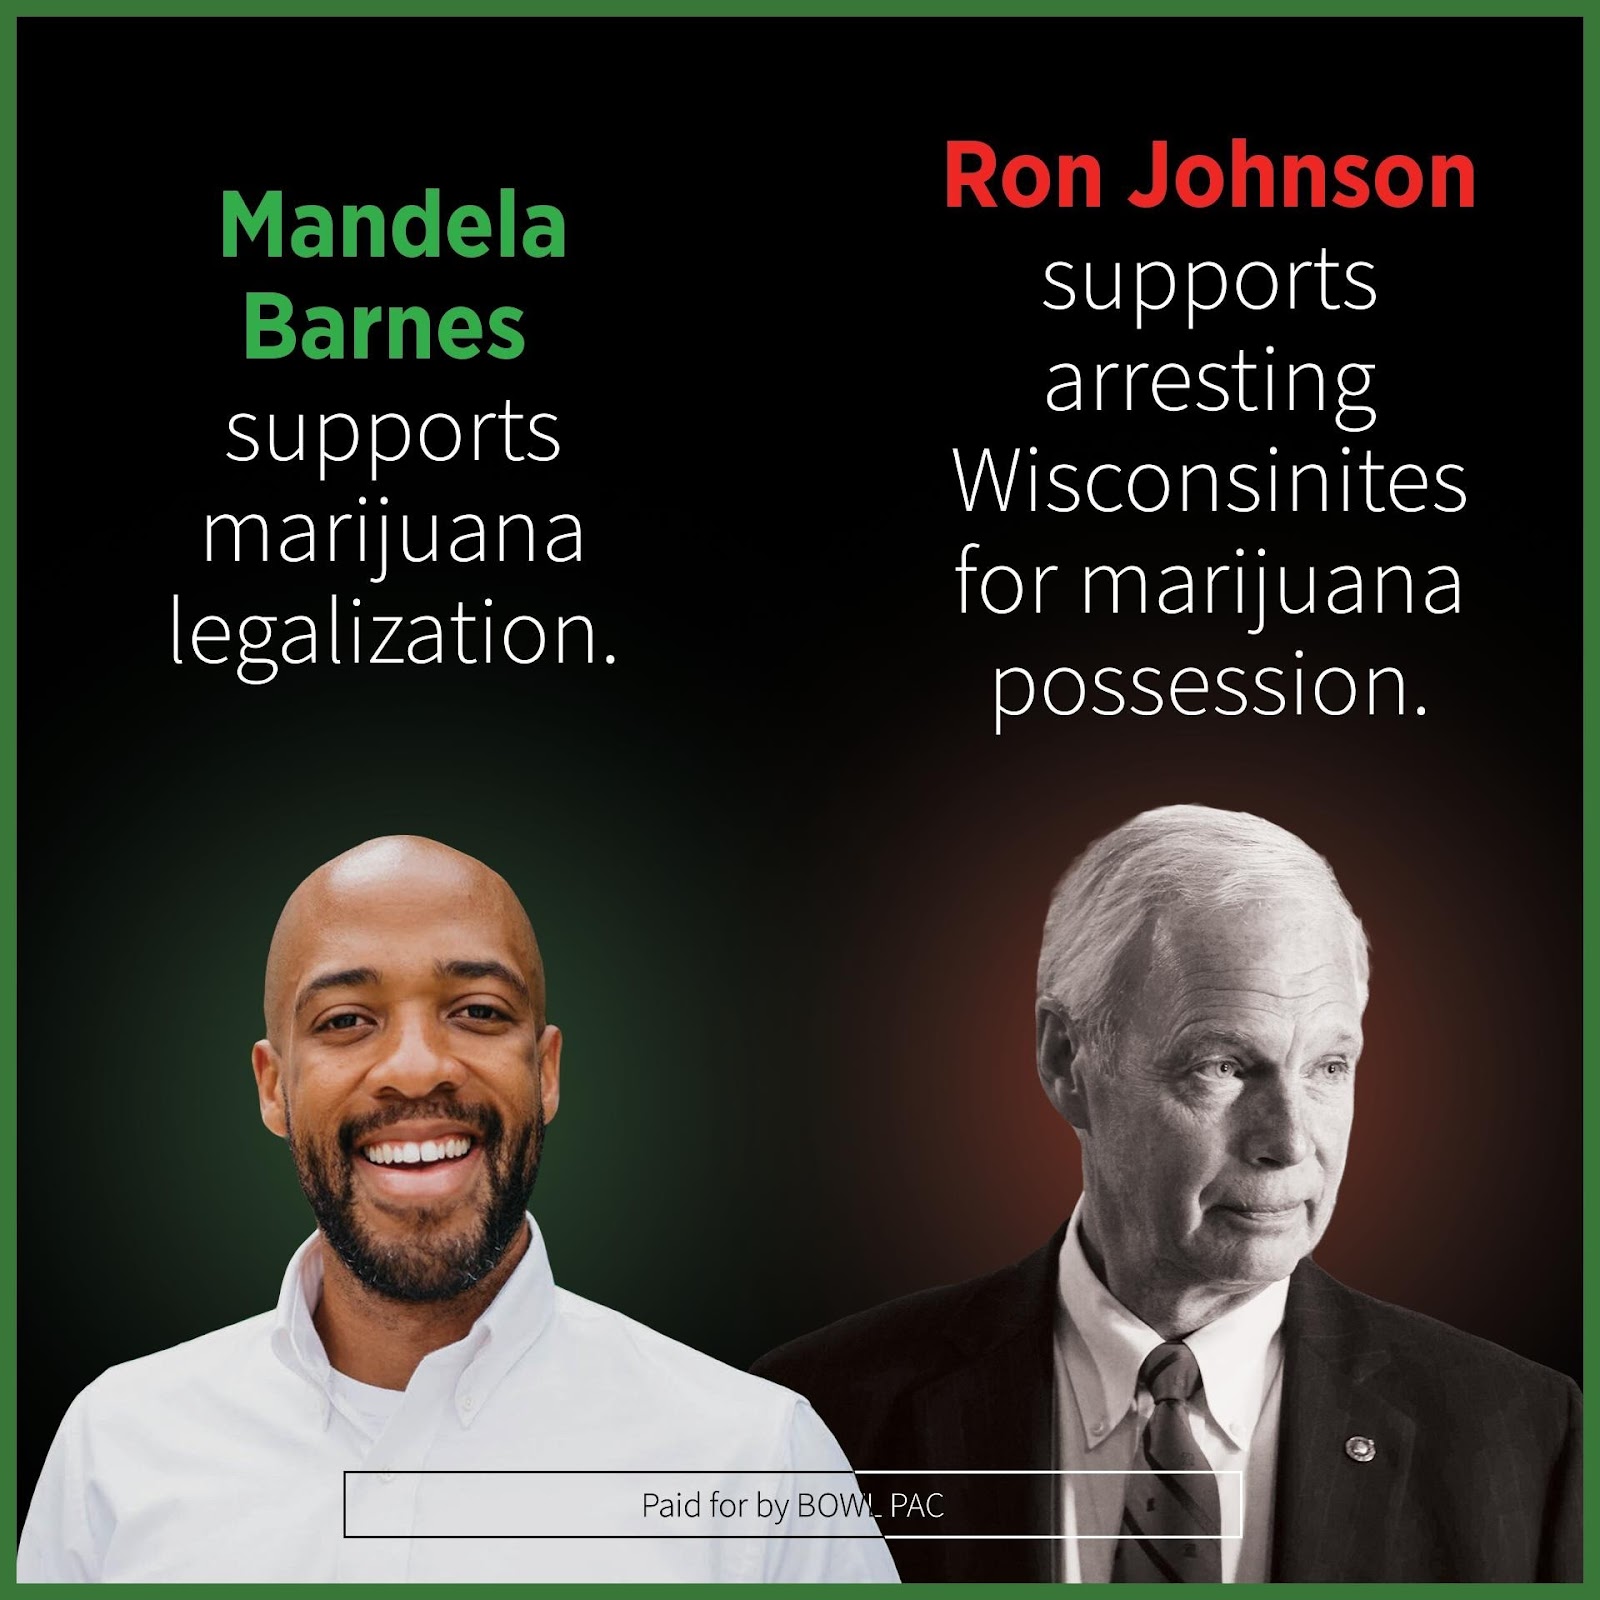 "Mandela Barnes supports marijuana legalization. Ron Johnson supports arresting Wisconsinites for marijuana possession."